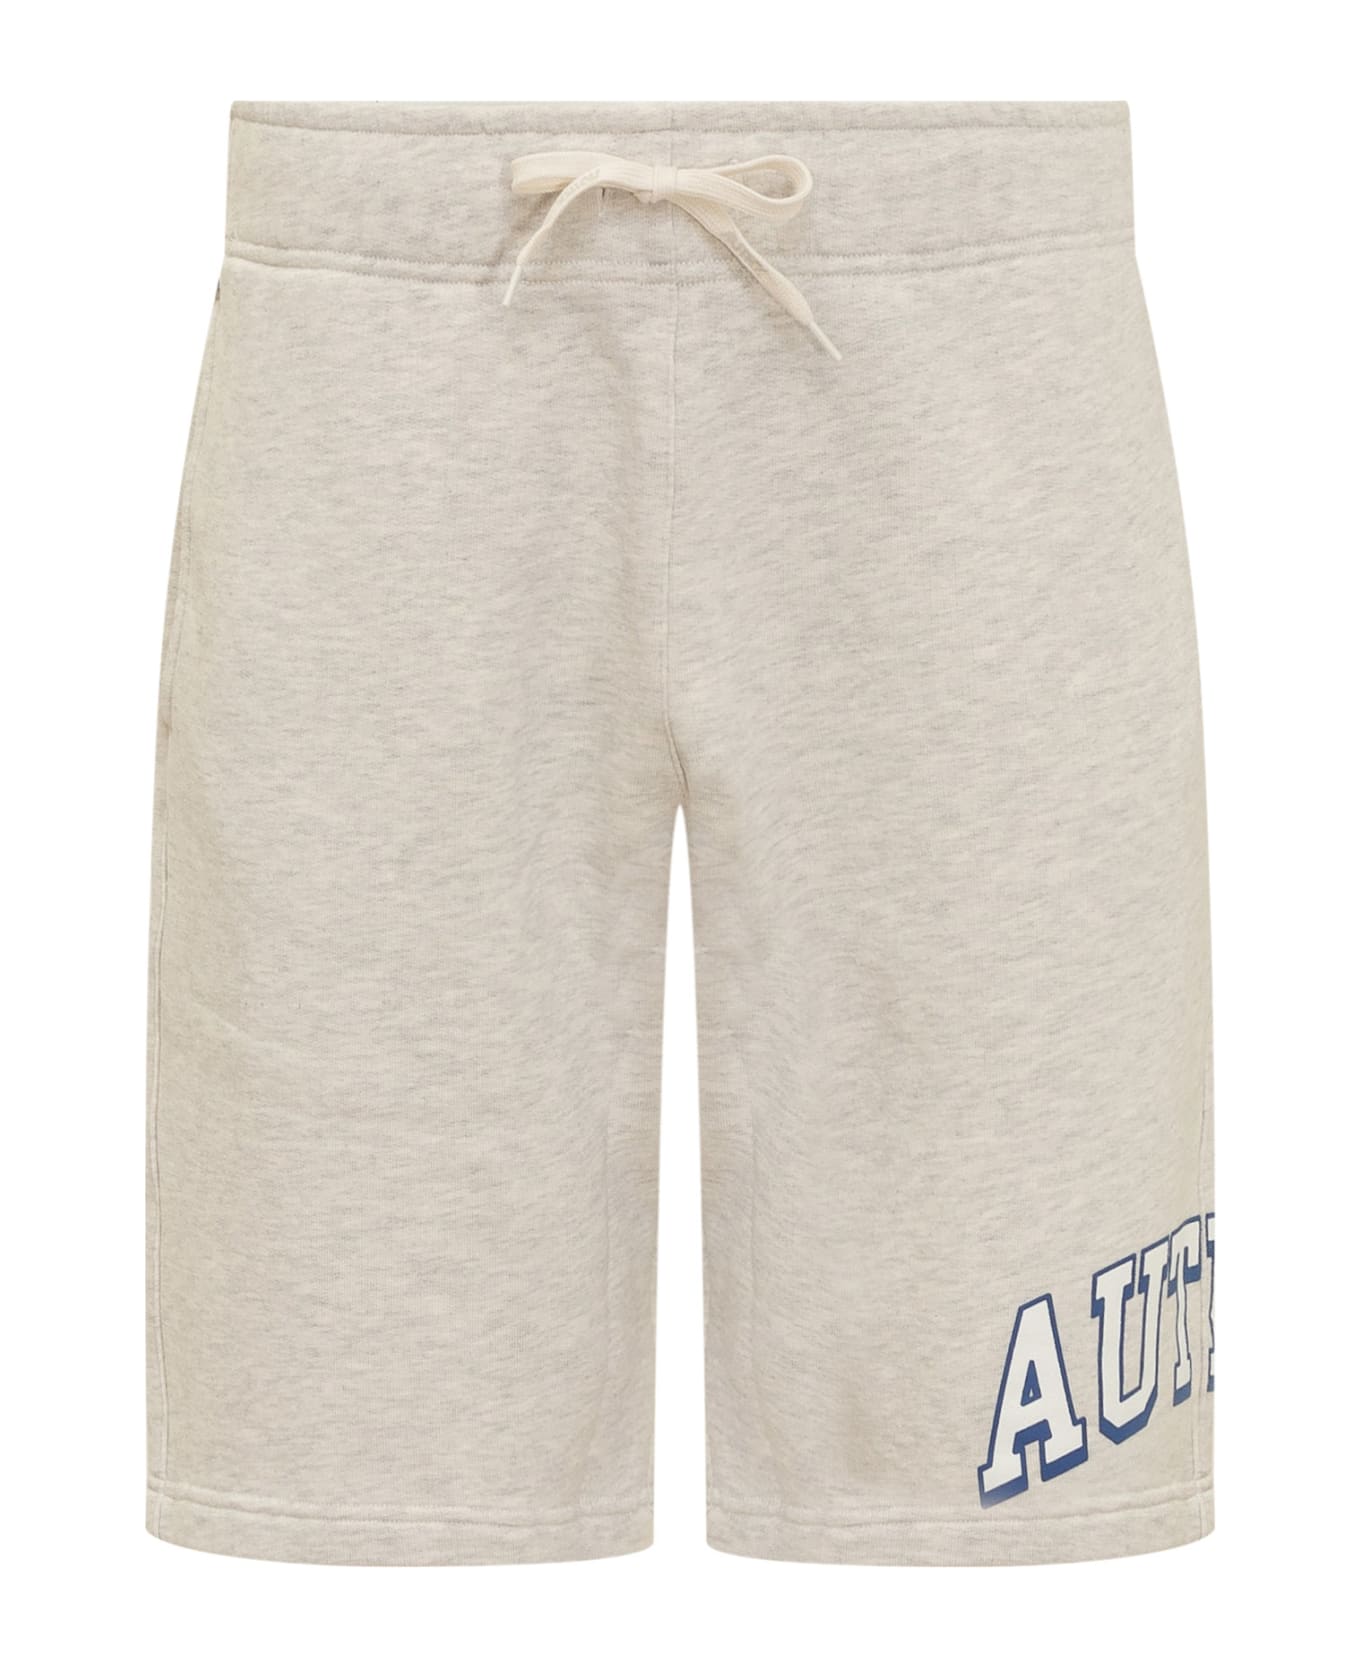 Autry Main Shorts - APPAREL MELANGE